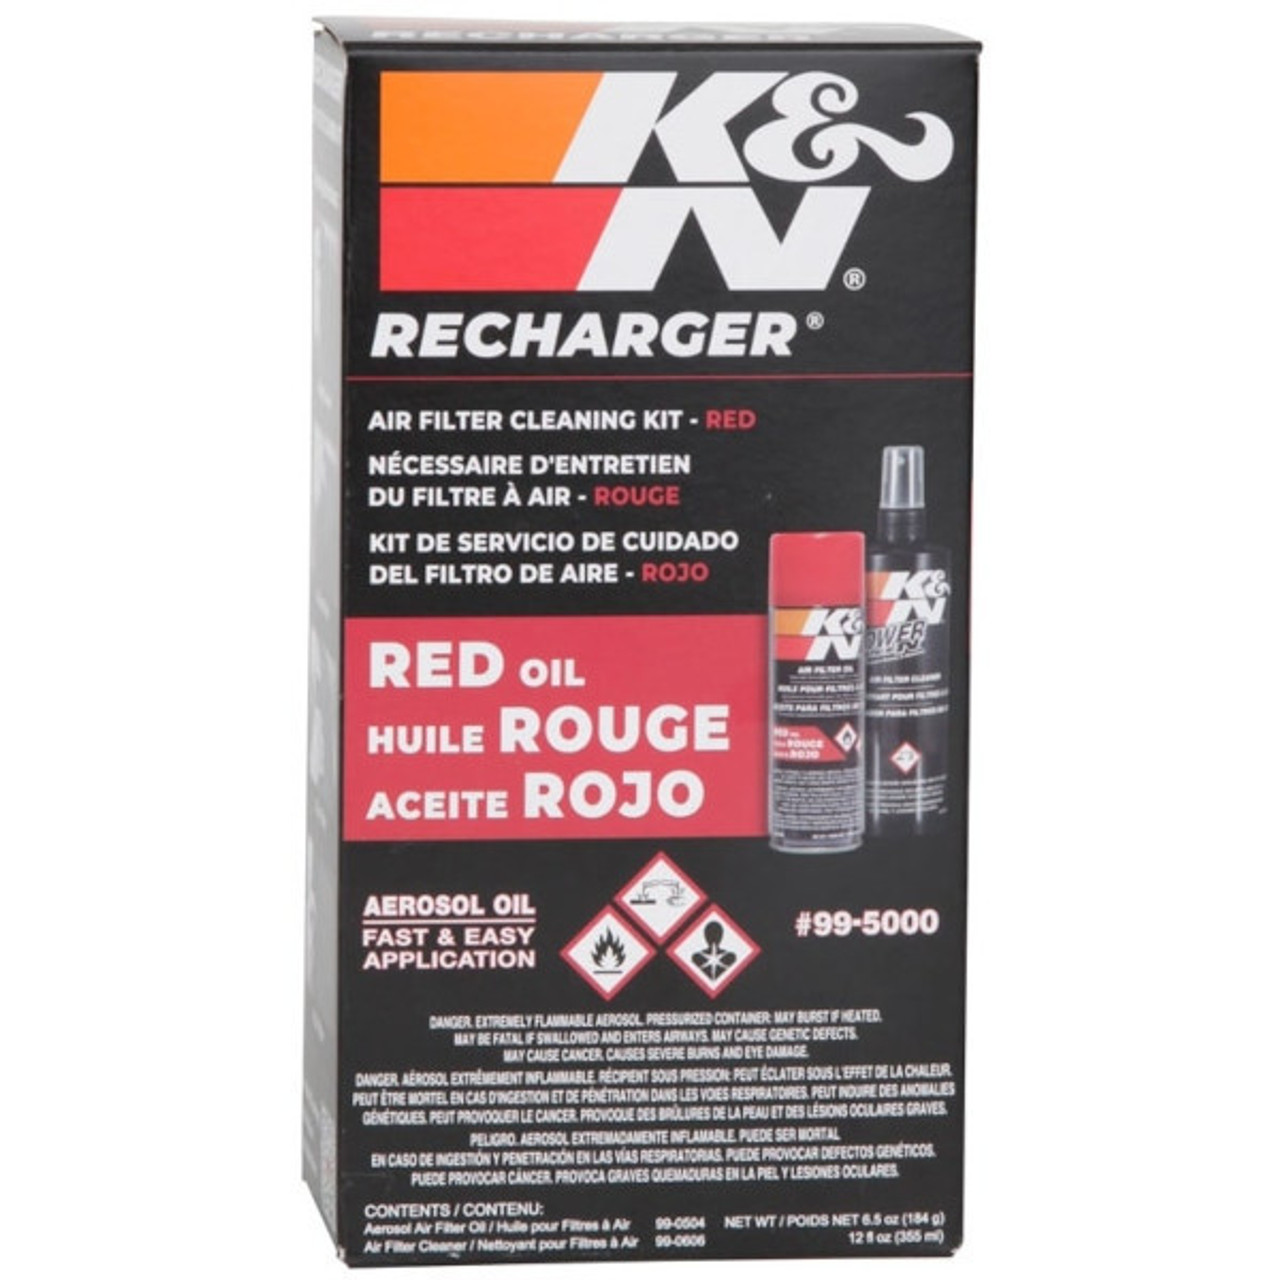 K&N Recharger/Filter Cleaning Kit Aerosol 99-5000 Oil Engine Cleaner Care  Spray